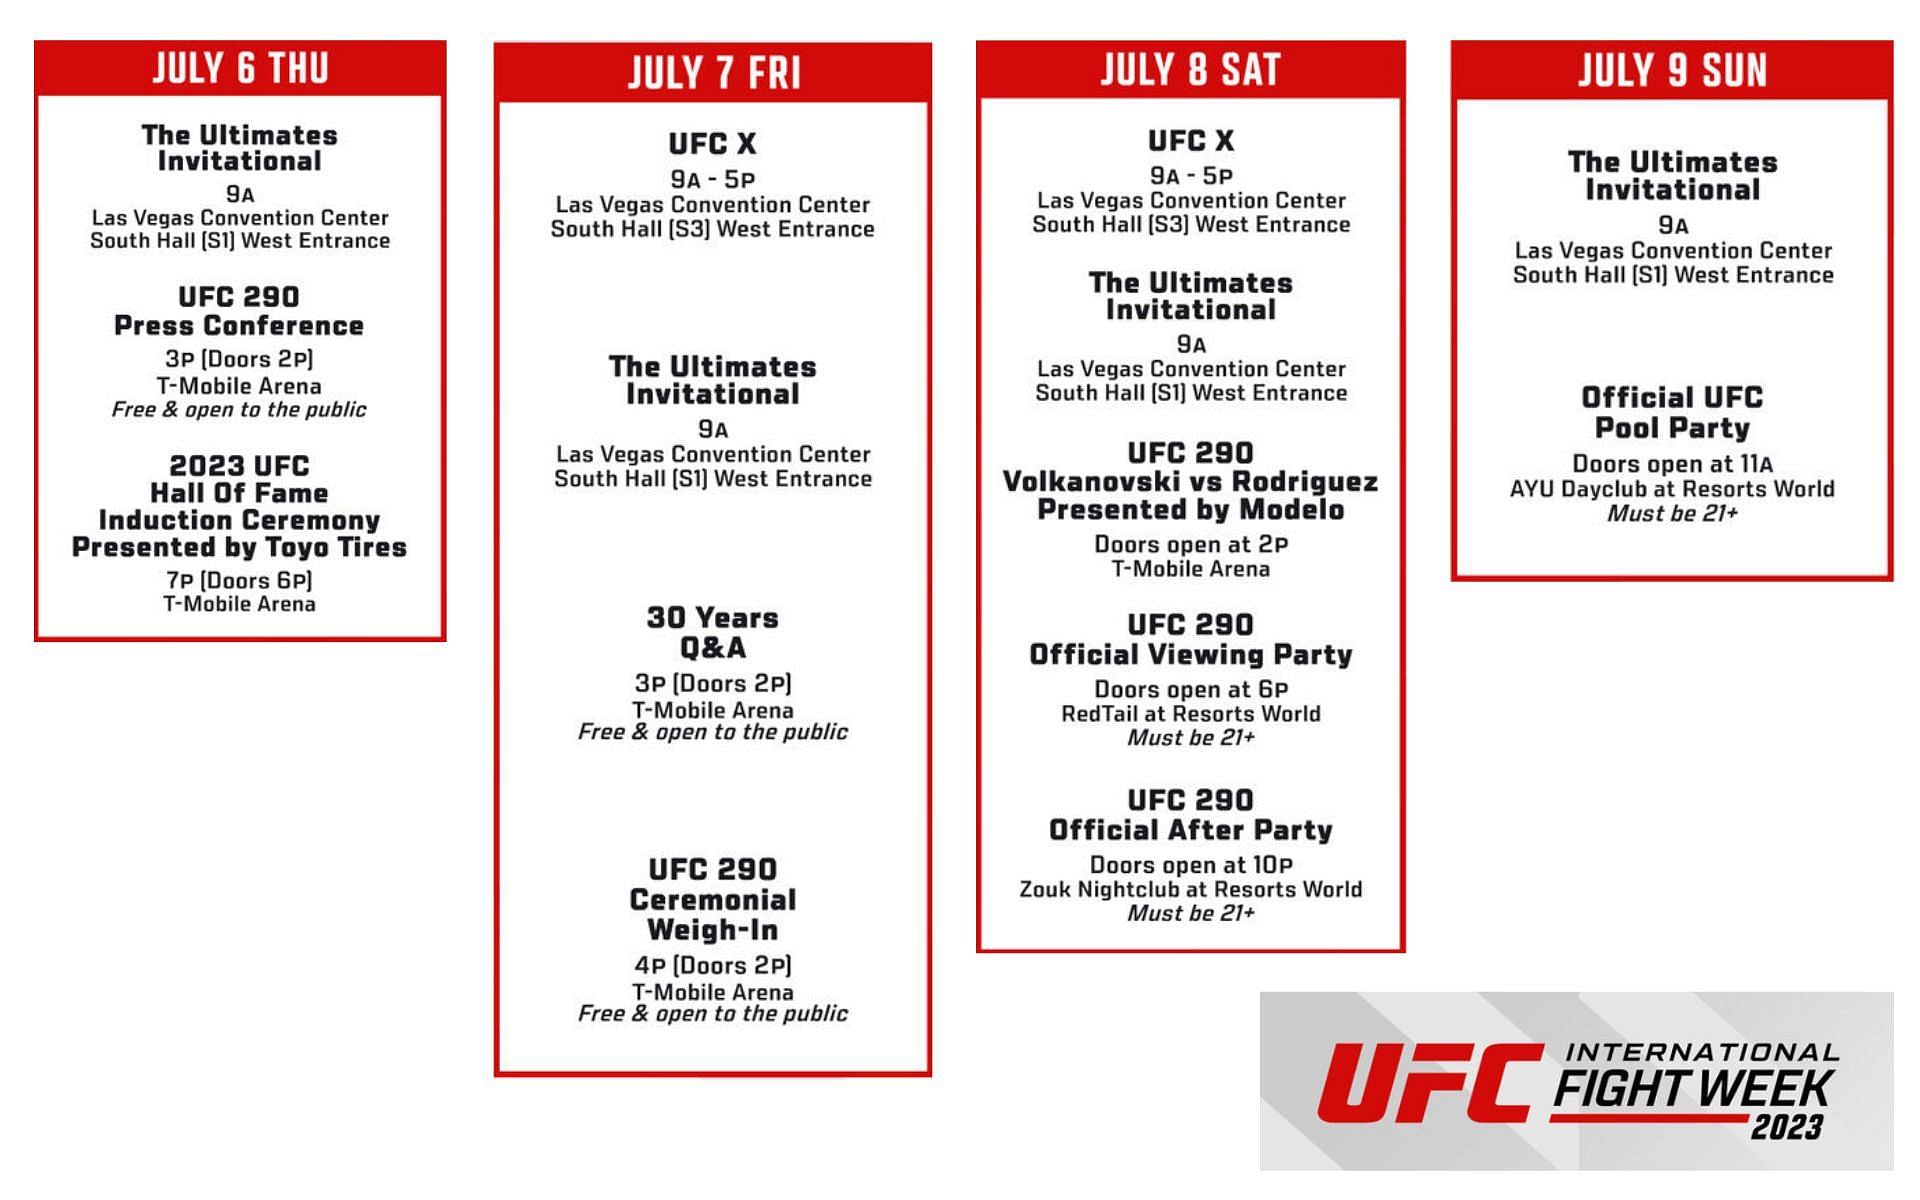 International Fight Week 2023 Schedule [Image courtesy: www.ufc.com]